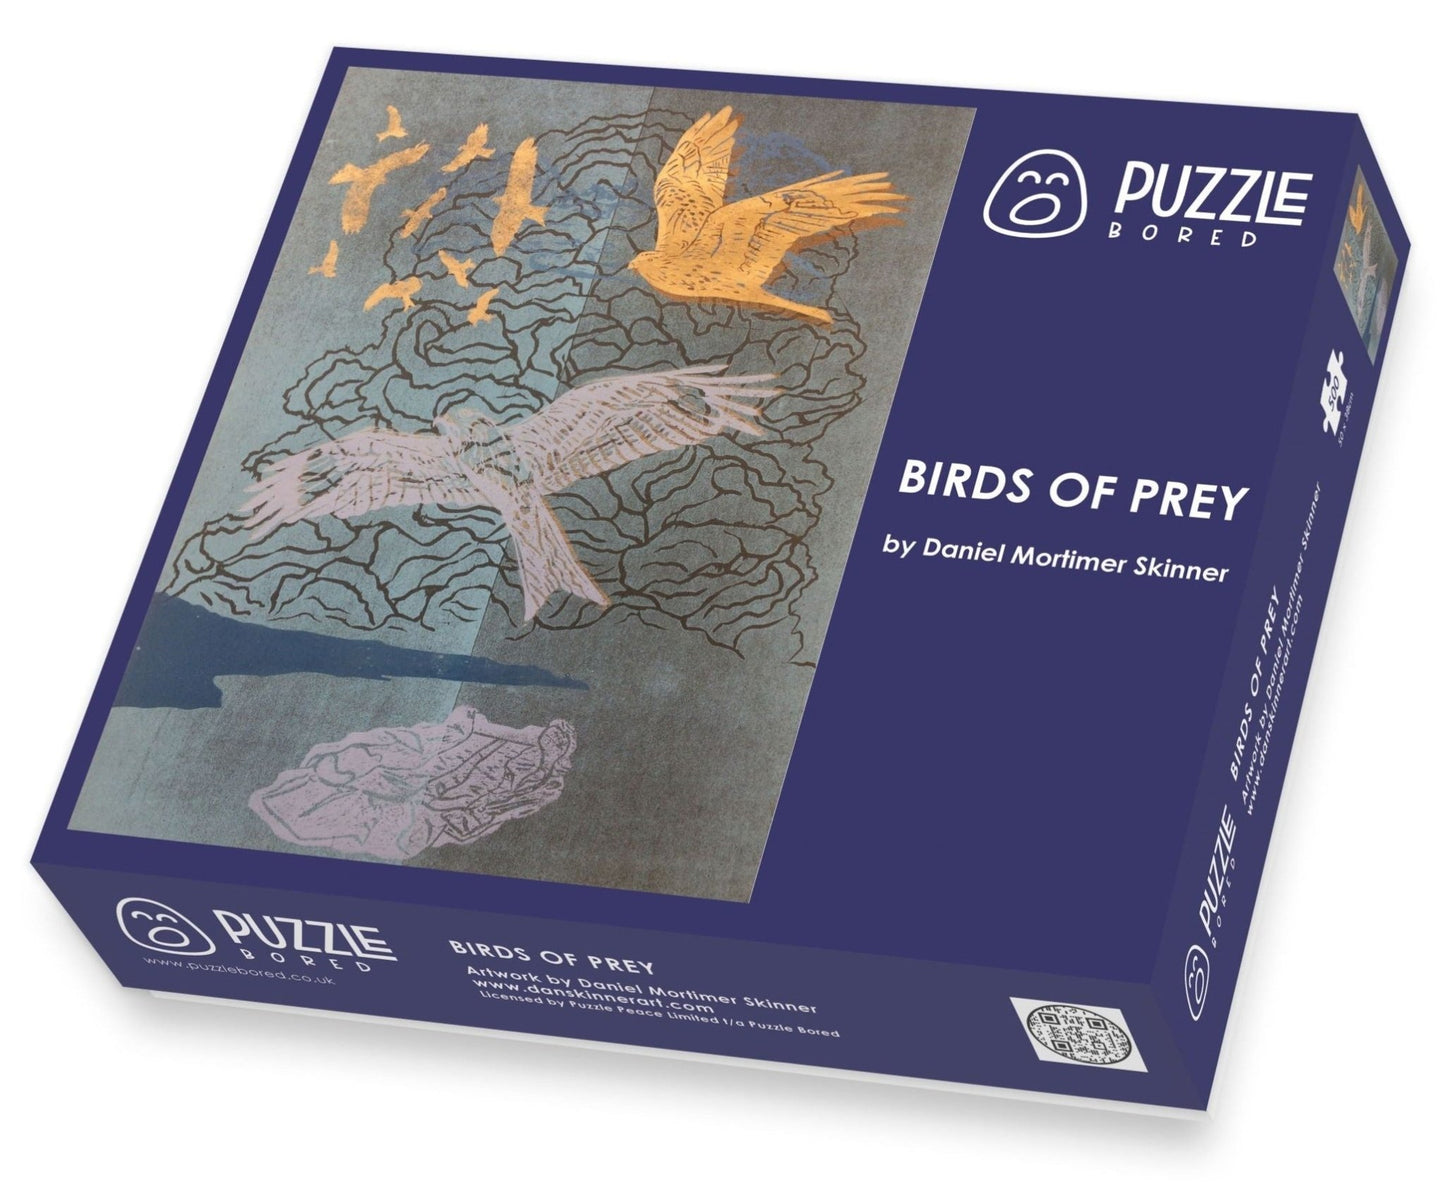 Birds of Prey by Daniel Mortimer Skinner - Puzzle Bored